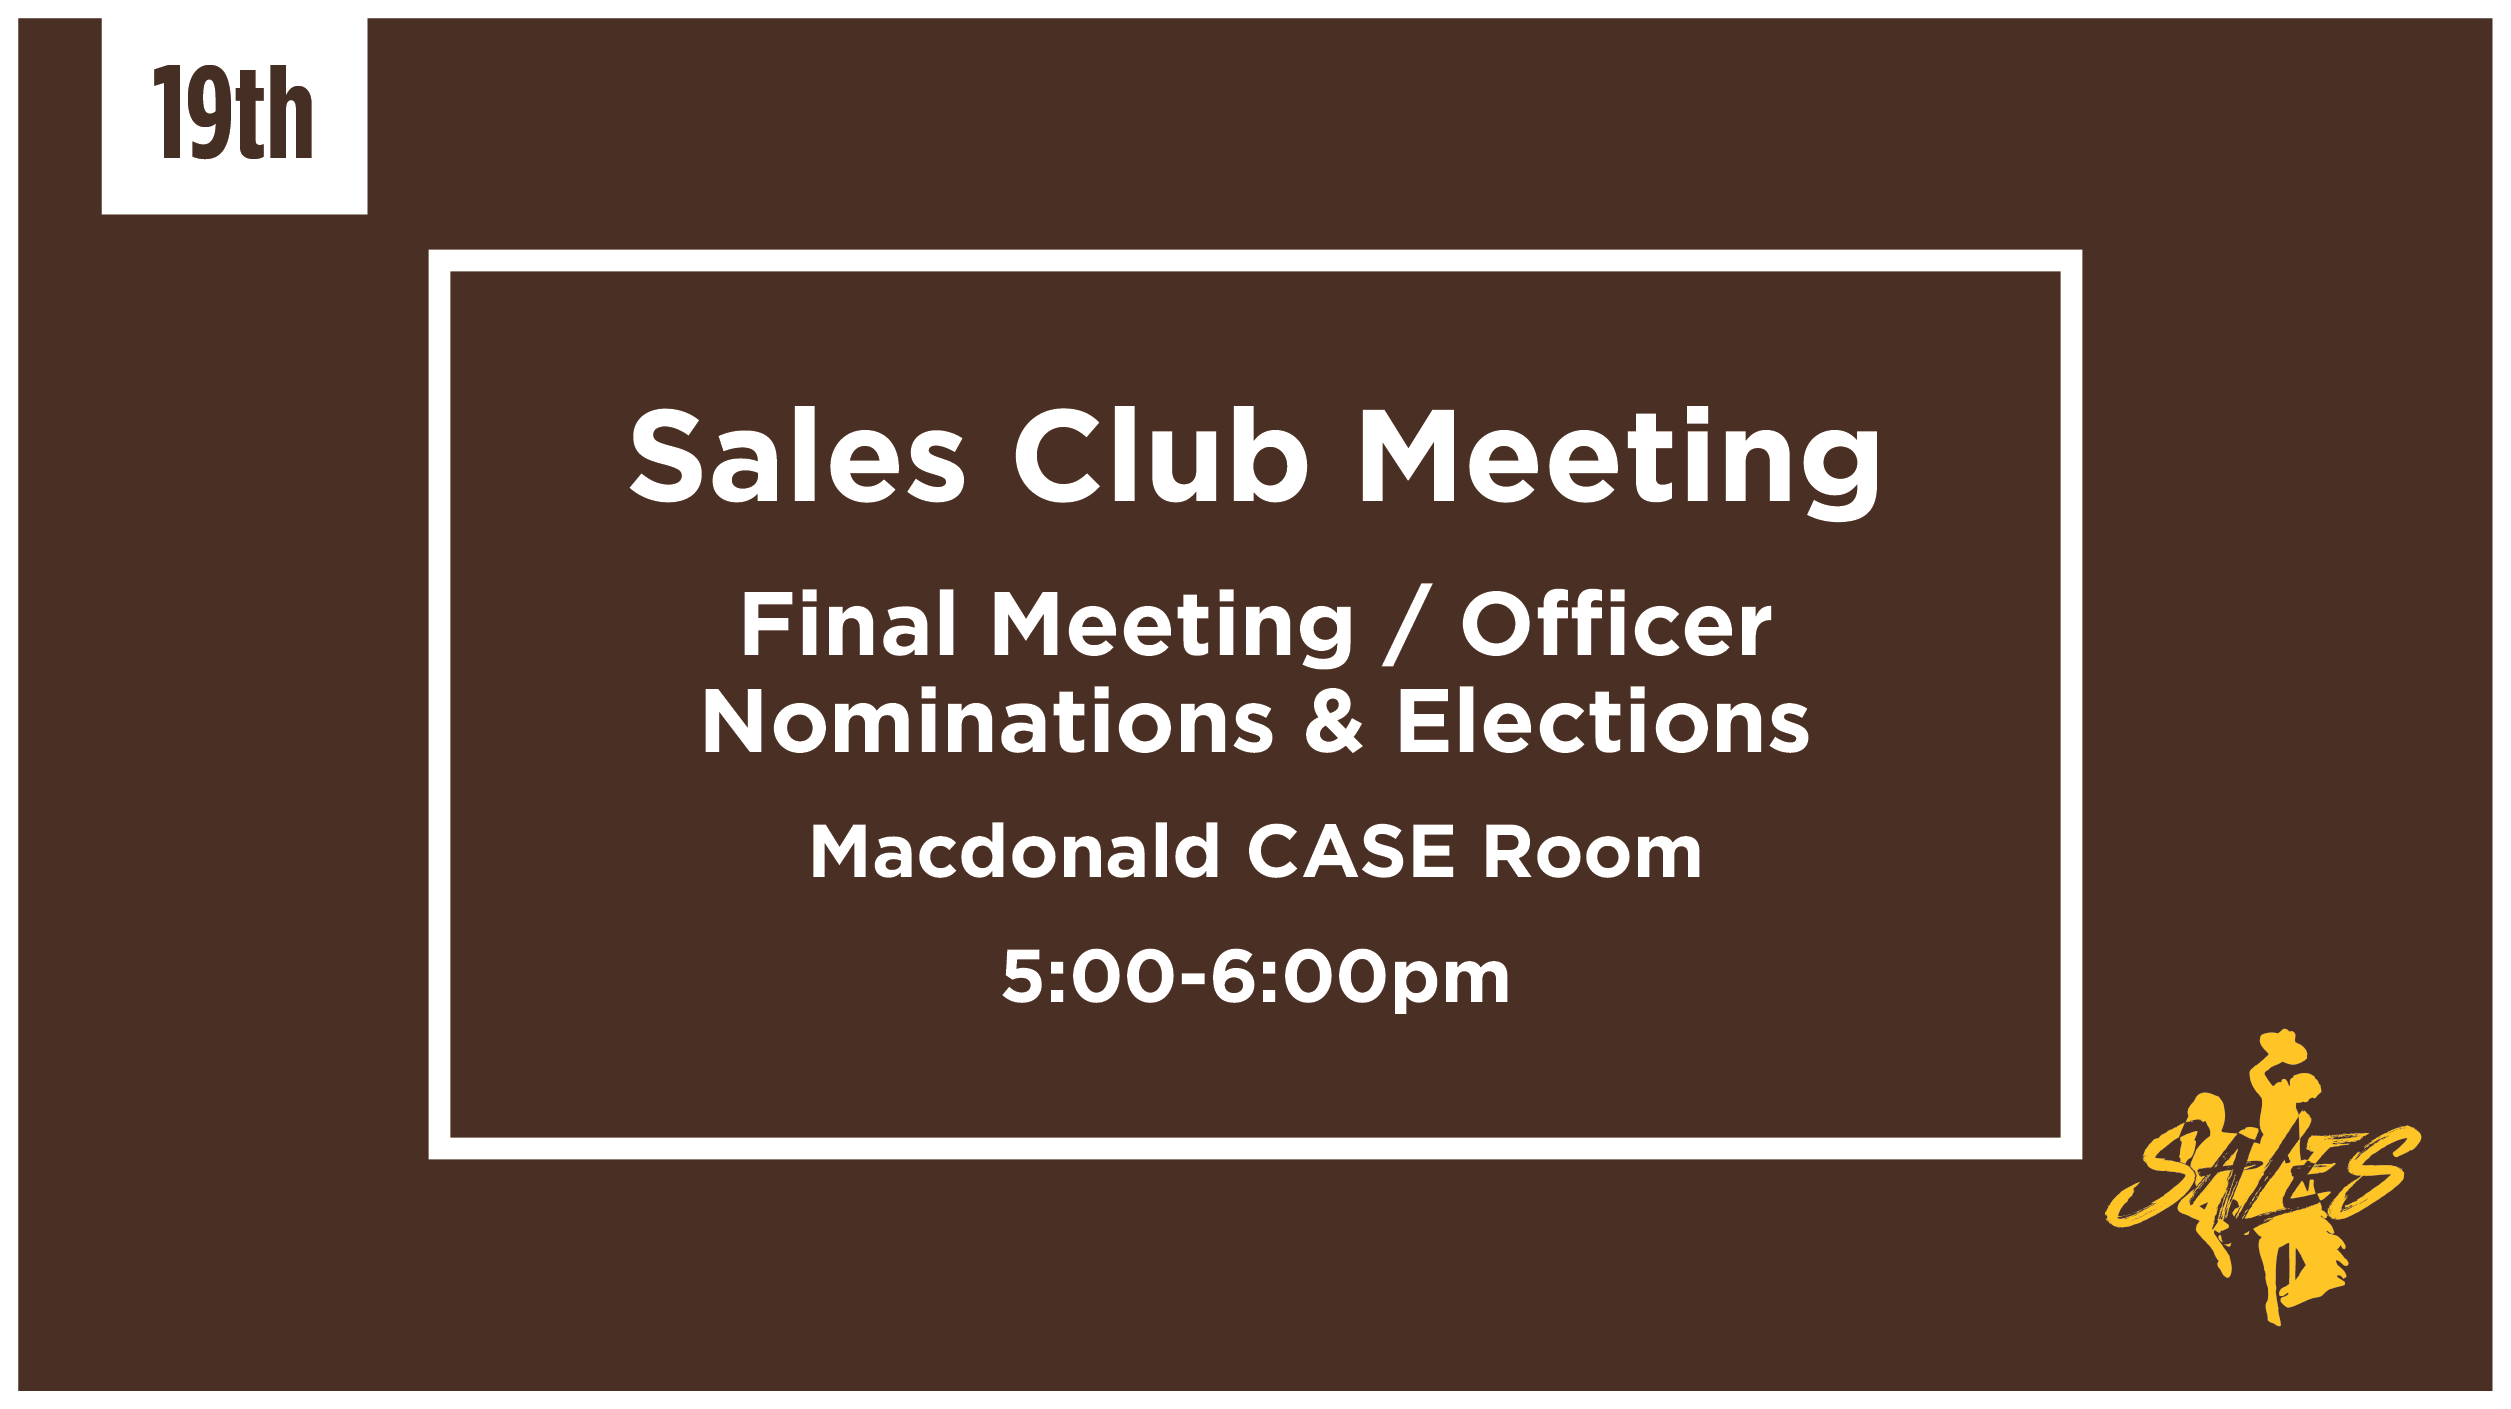 Sales Club Meeting April 19